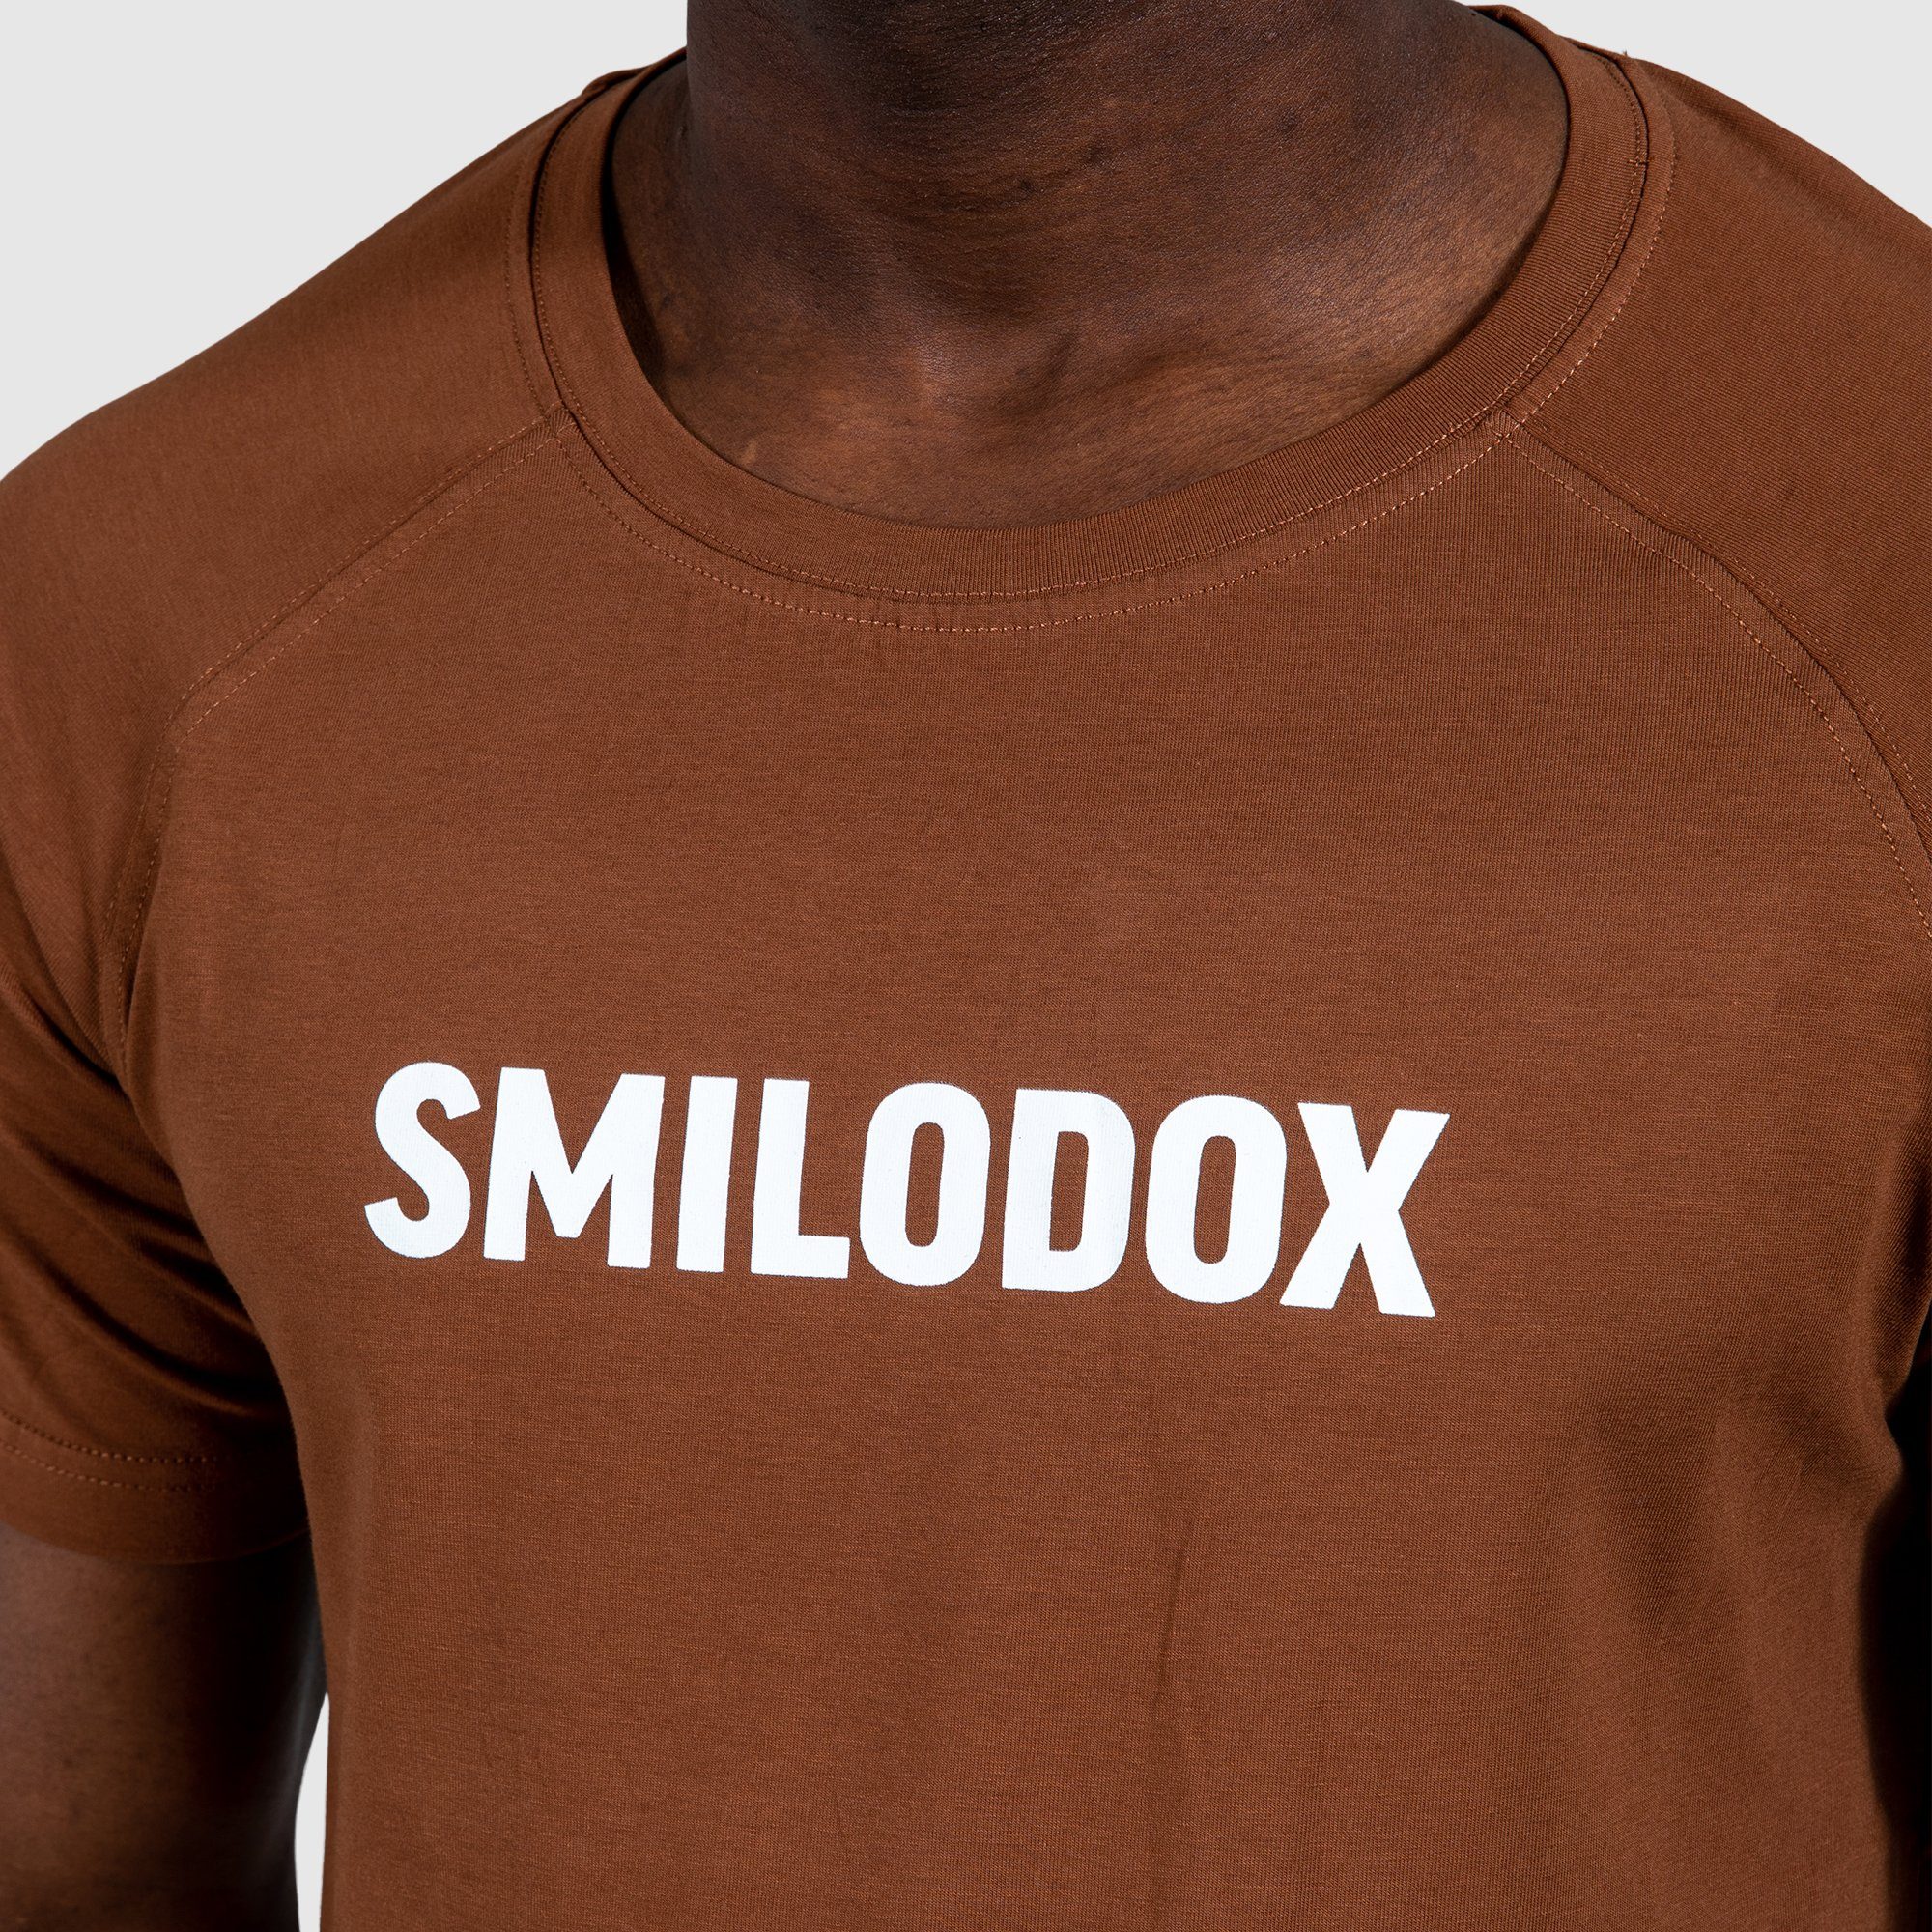 T-Shirt Smilodox Braun Khamzat